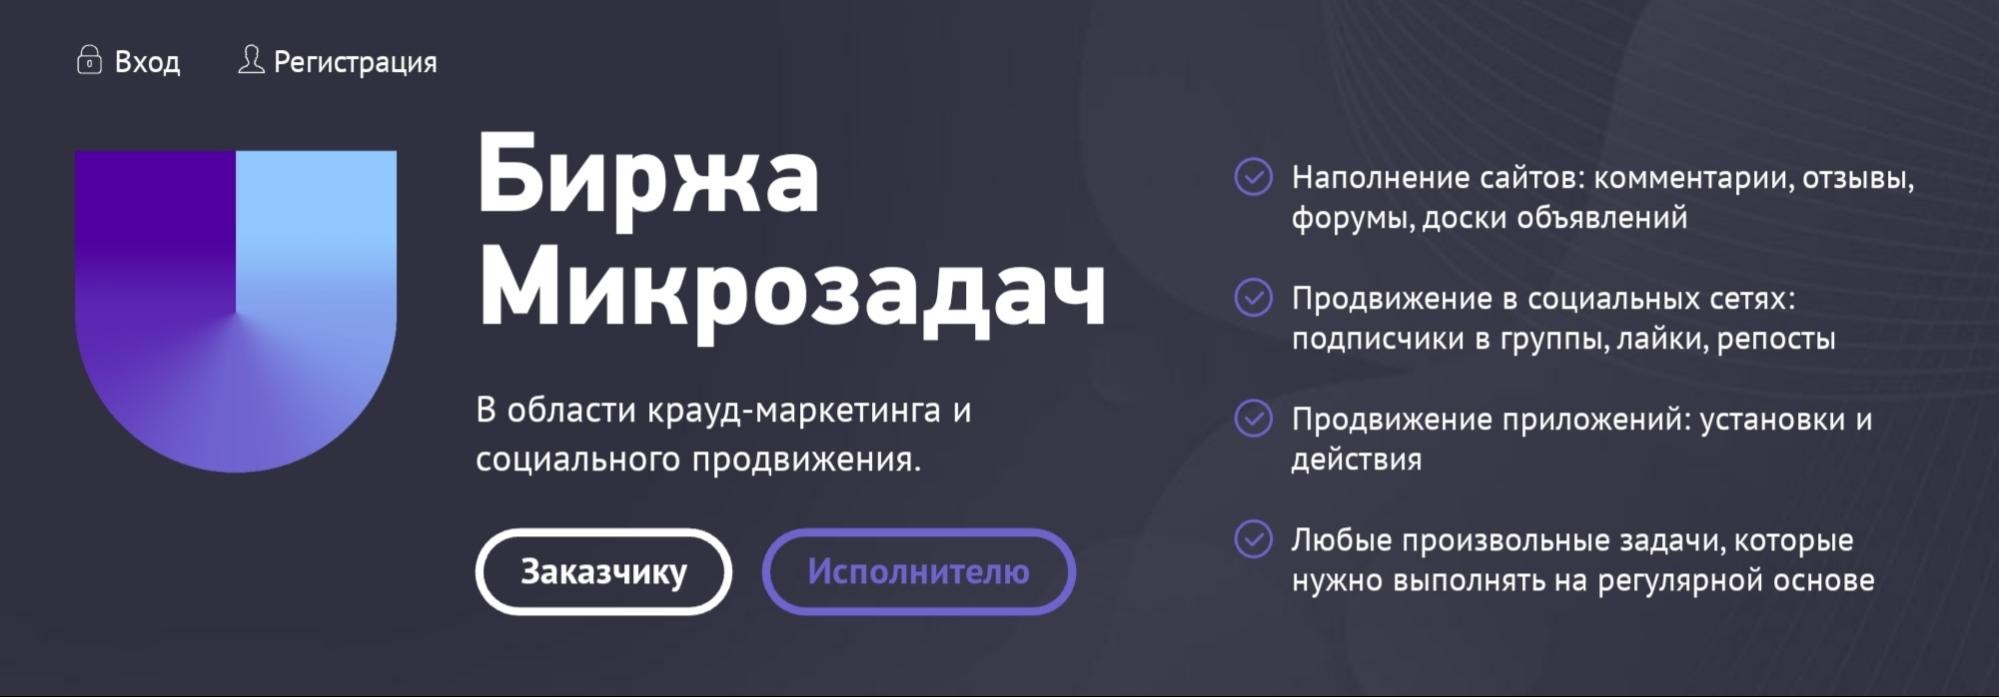 Сайт Unu.ru обзор